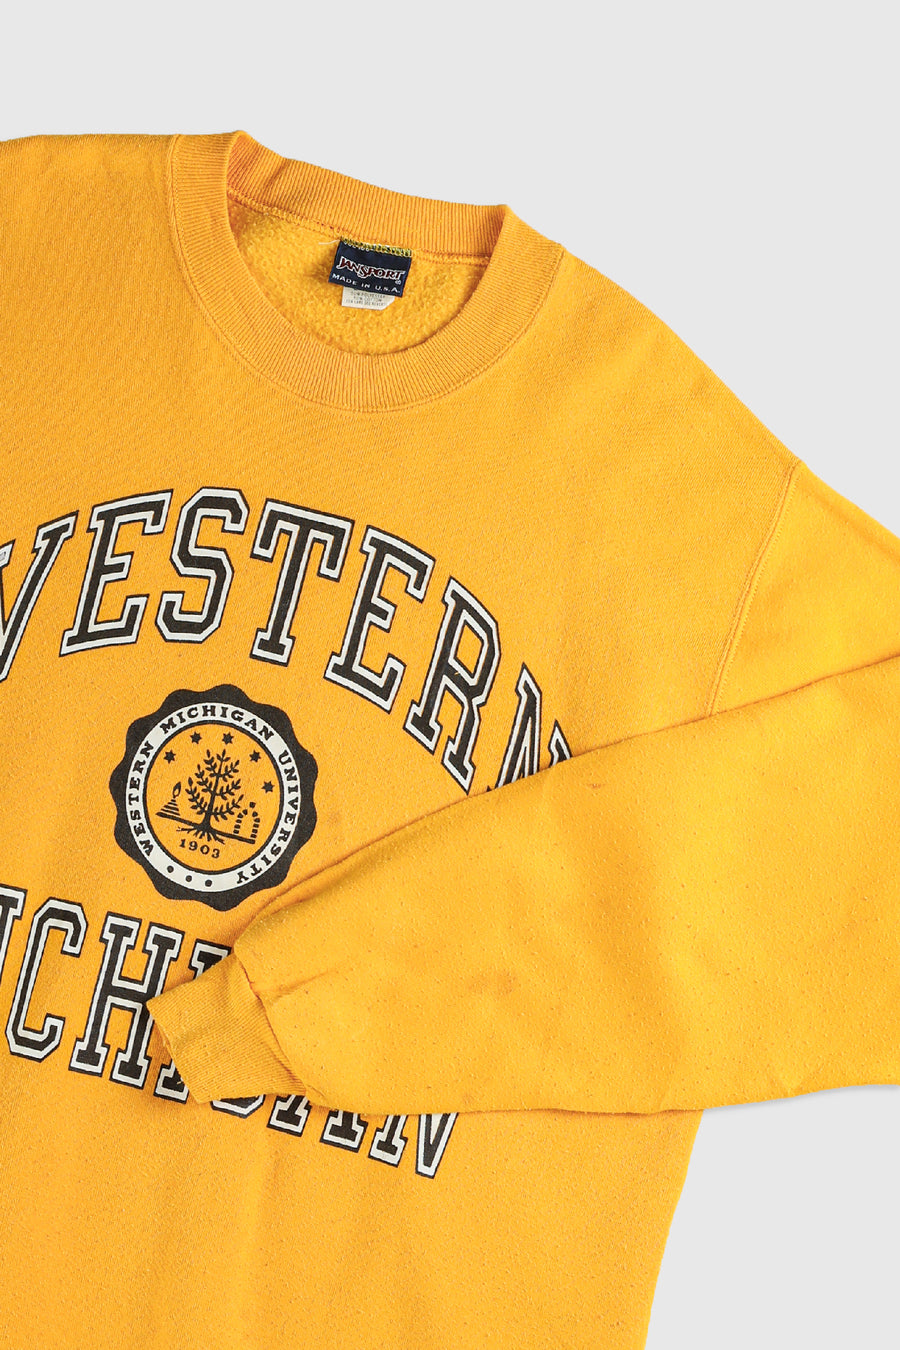 Vintage Western Michigan Sweatshirt